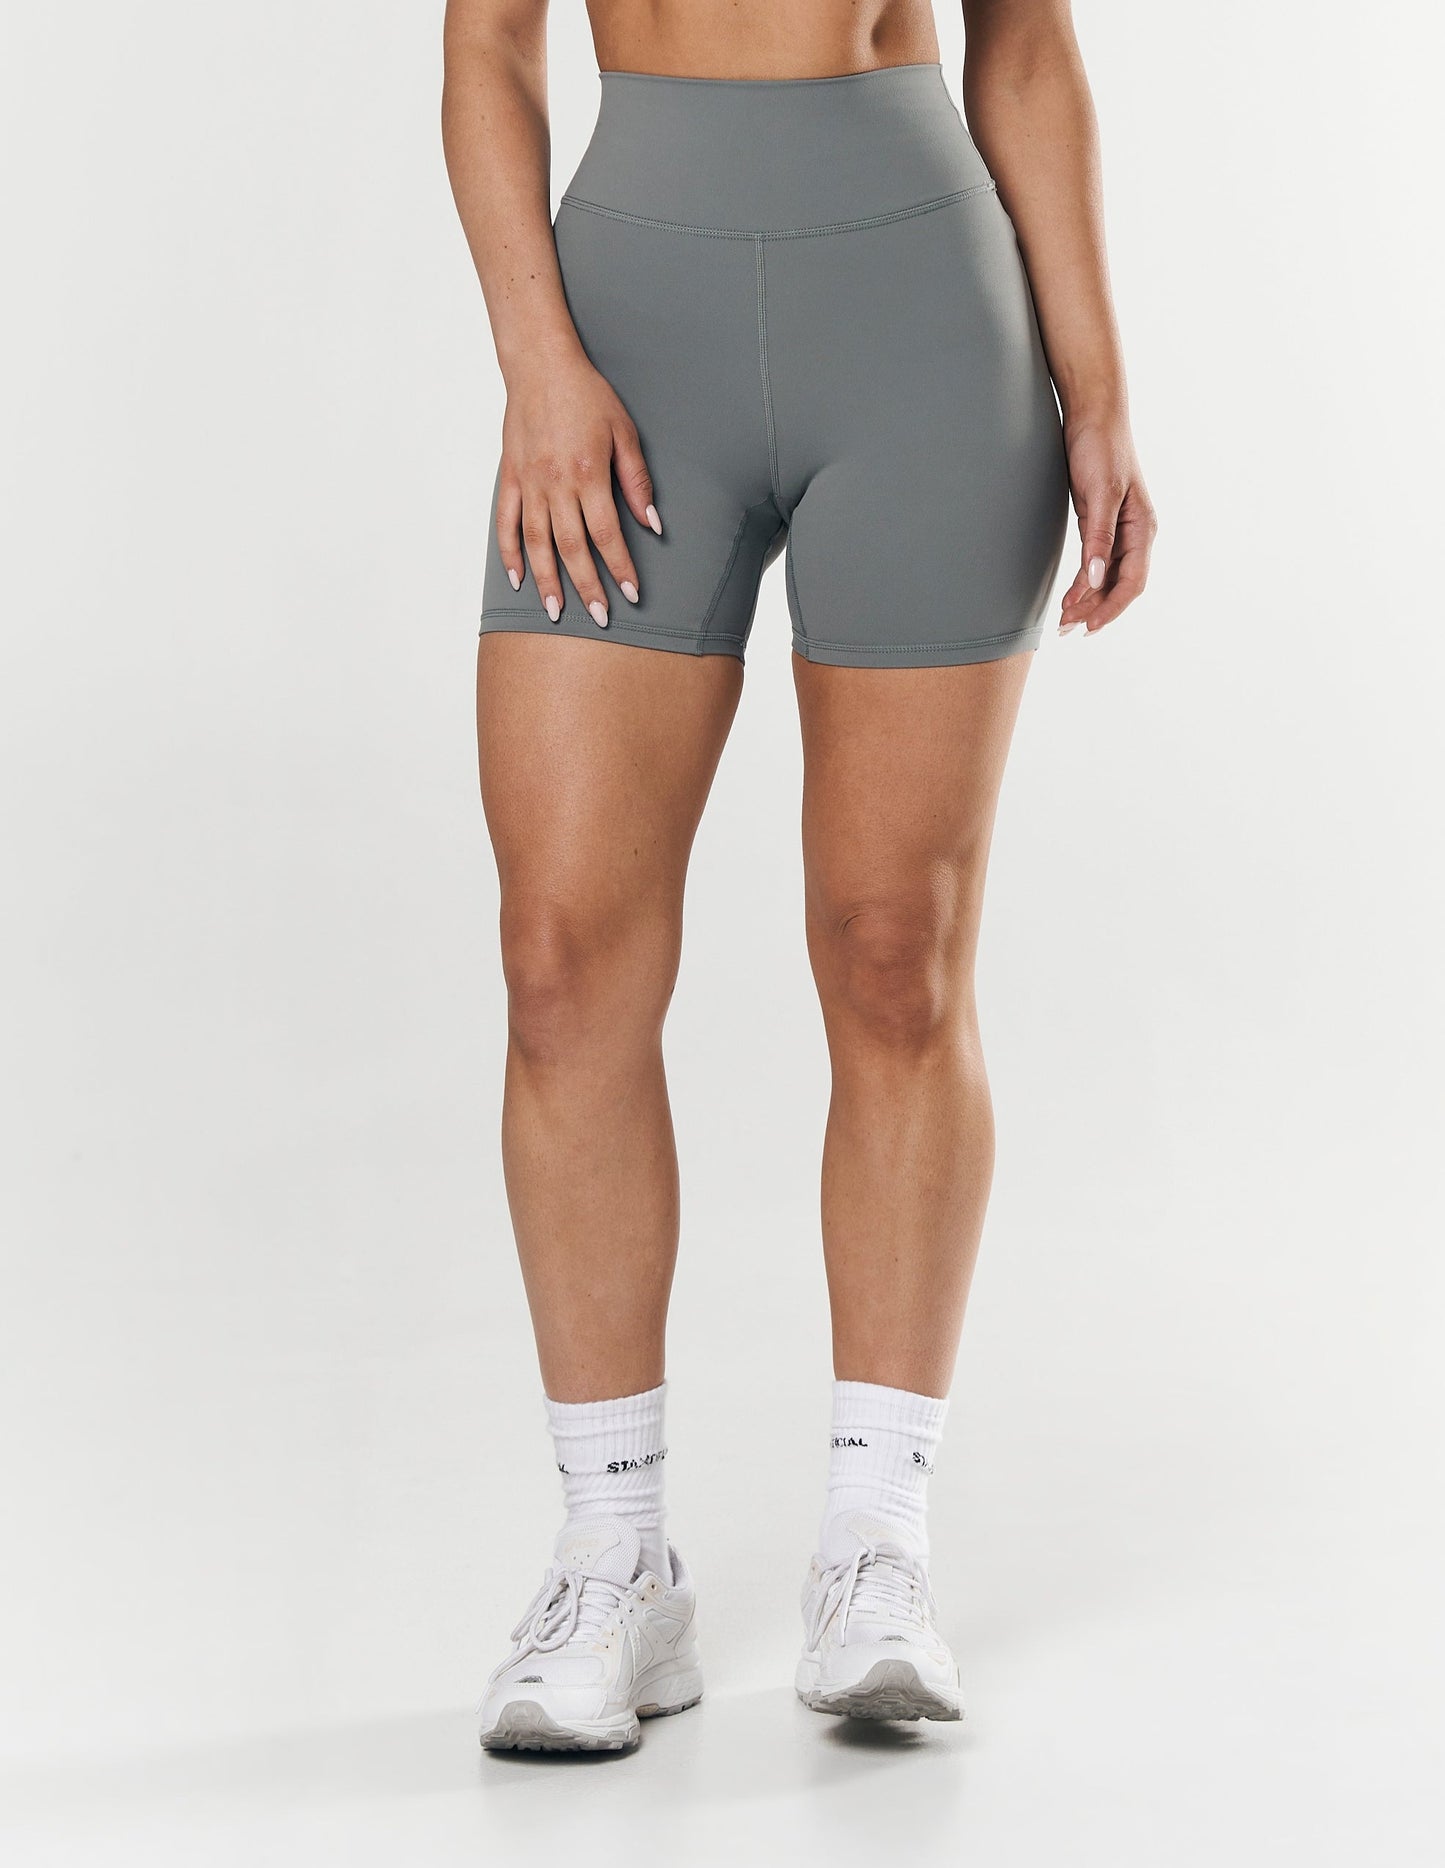 Midi Bike Shorts NANDEX ™ - Thyme